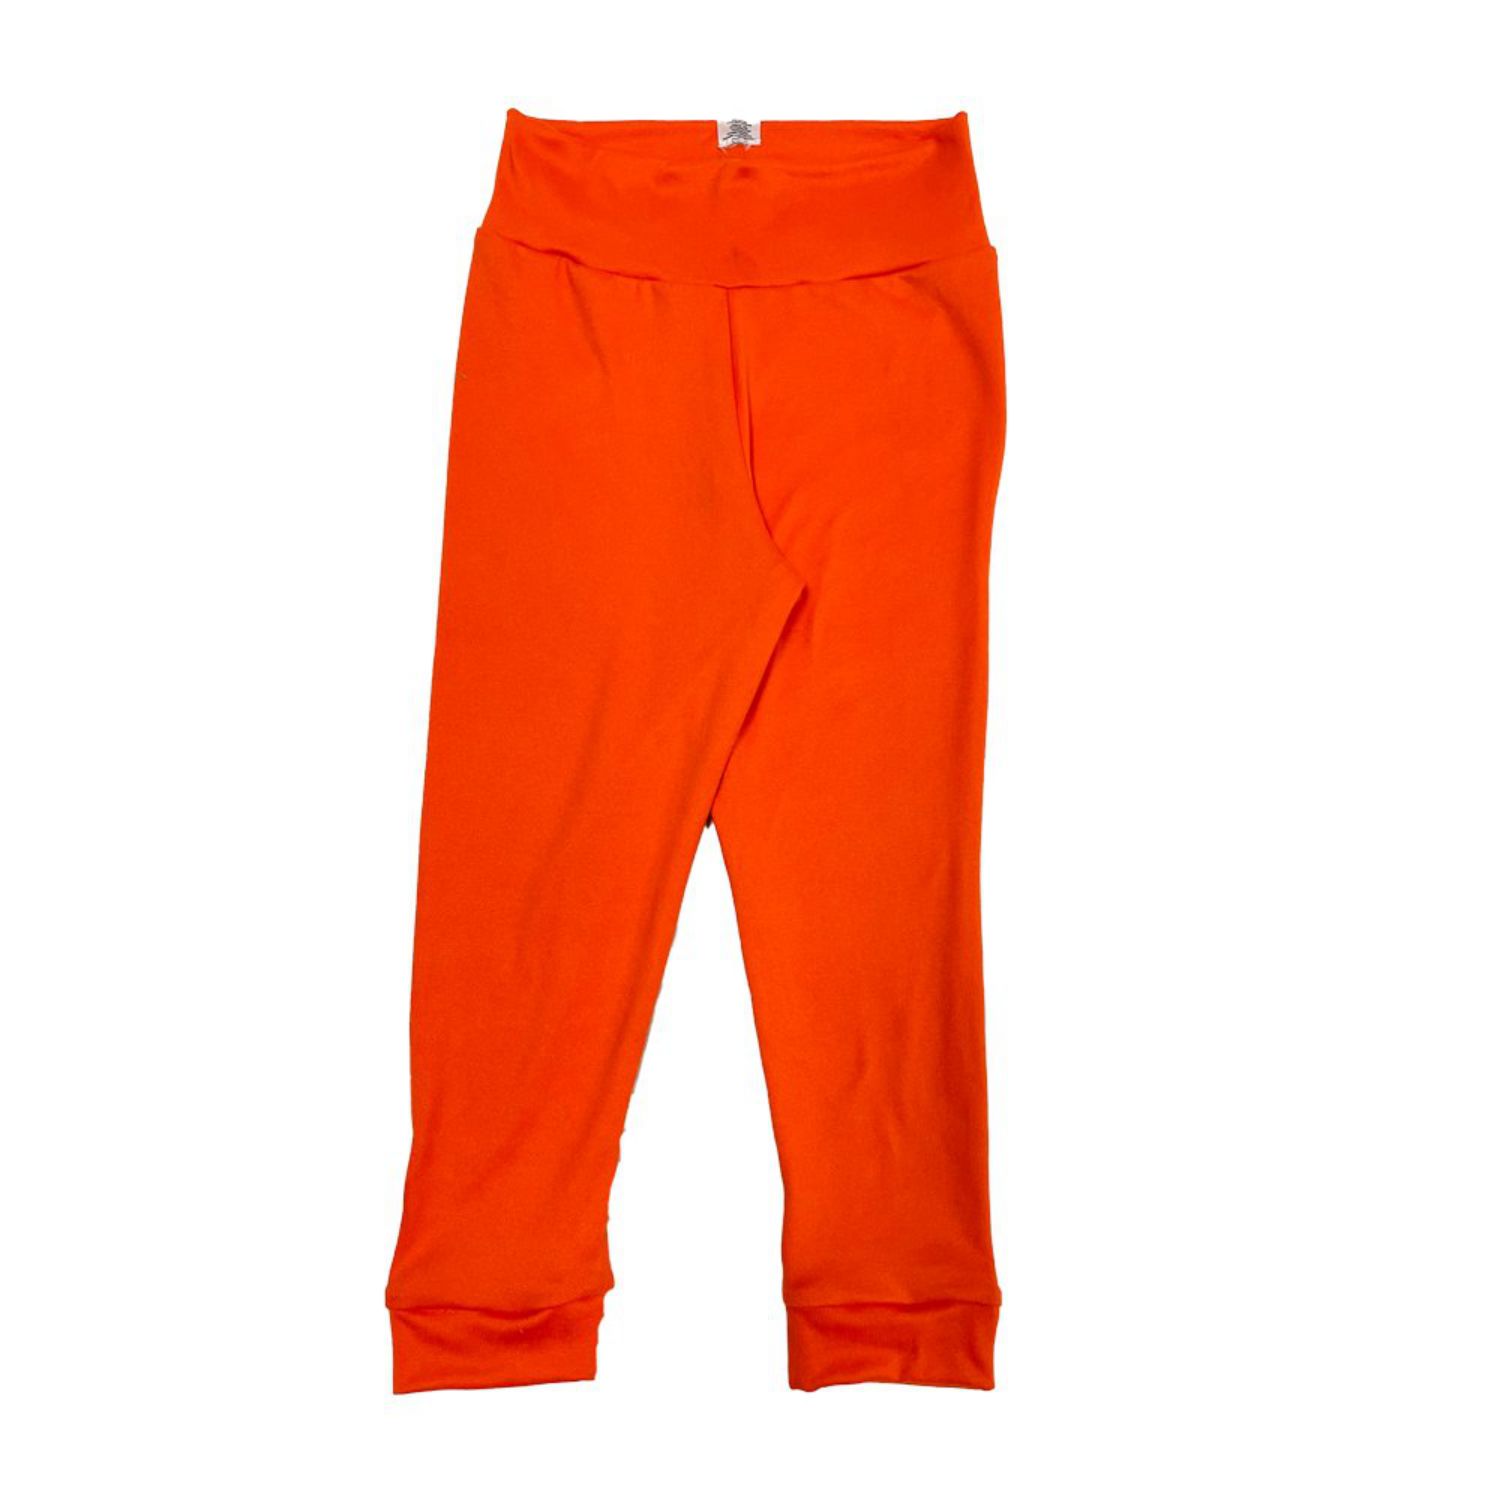 Bumblito Leggings (Size: M / Print: Orange) Pattern: Orange / Size: M (74 - 98)